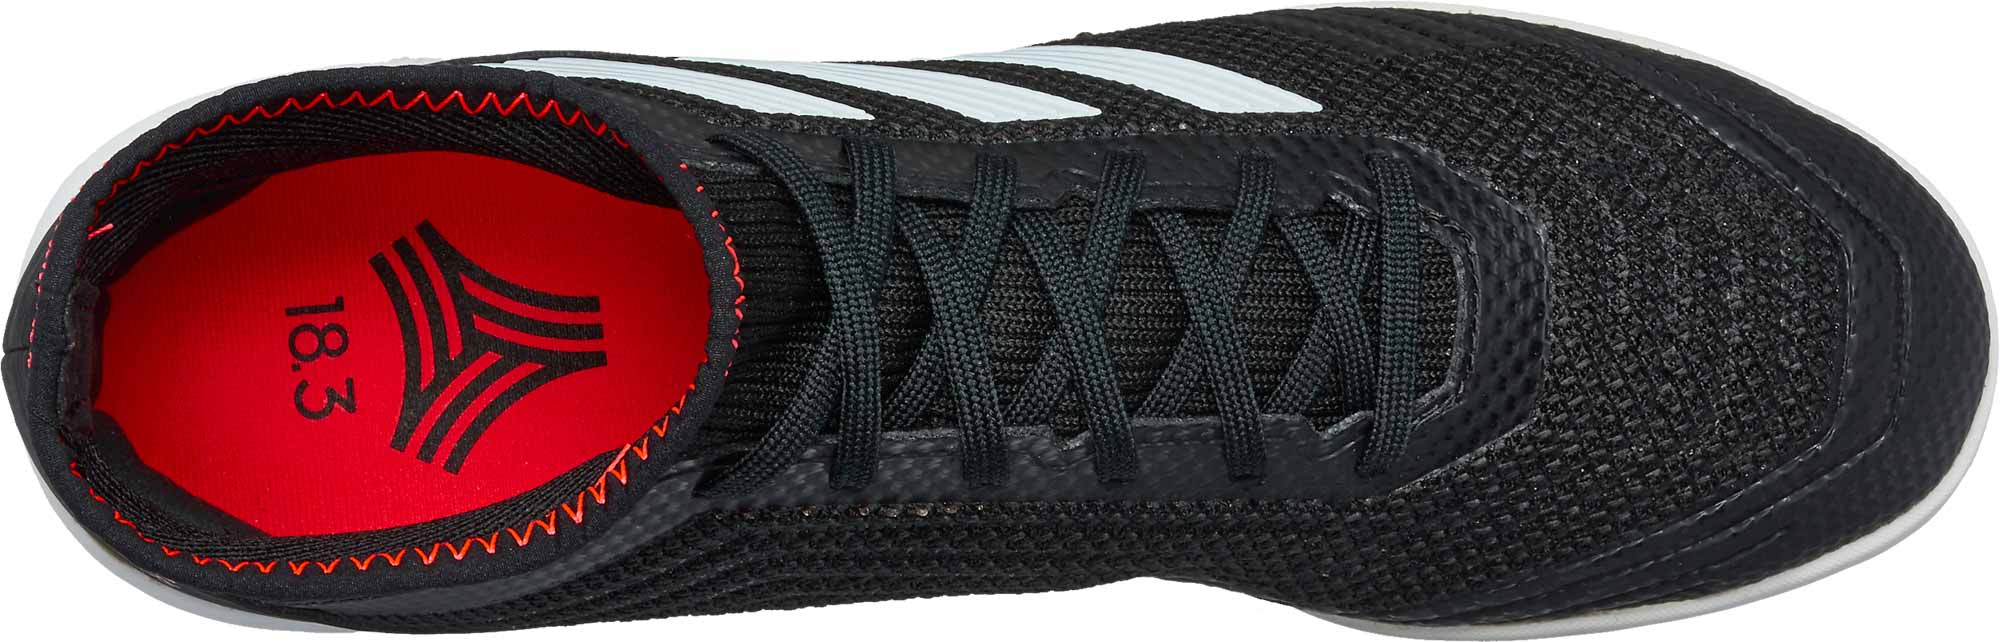 adidas Predator Tango 18.3 IN - Black Indoor Shoes